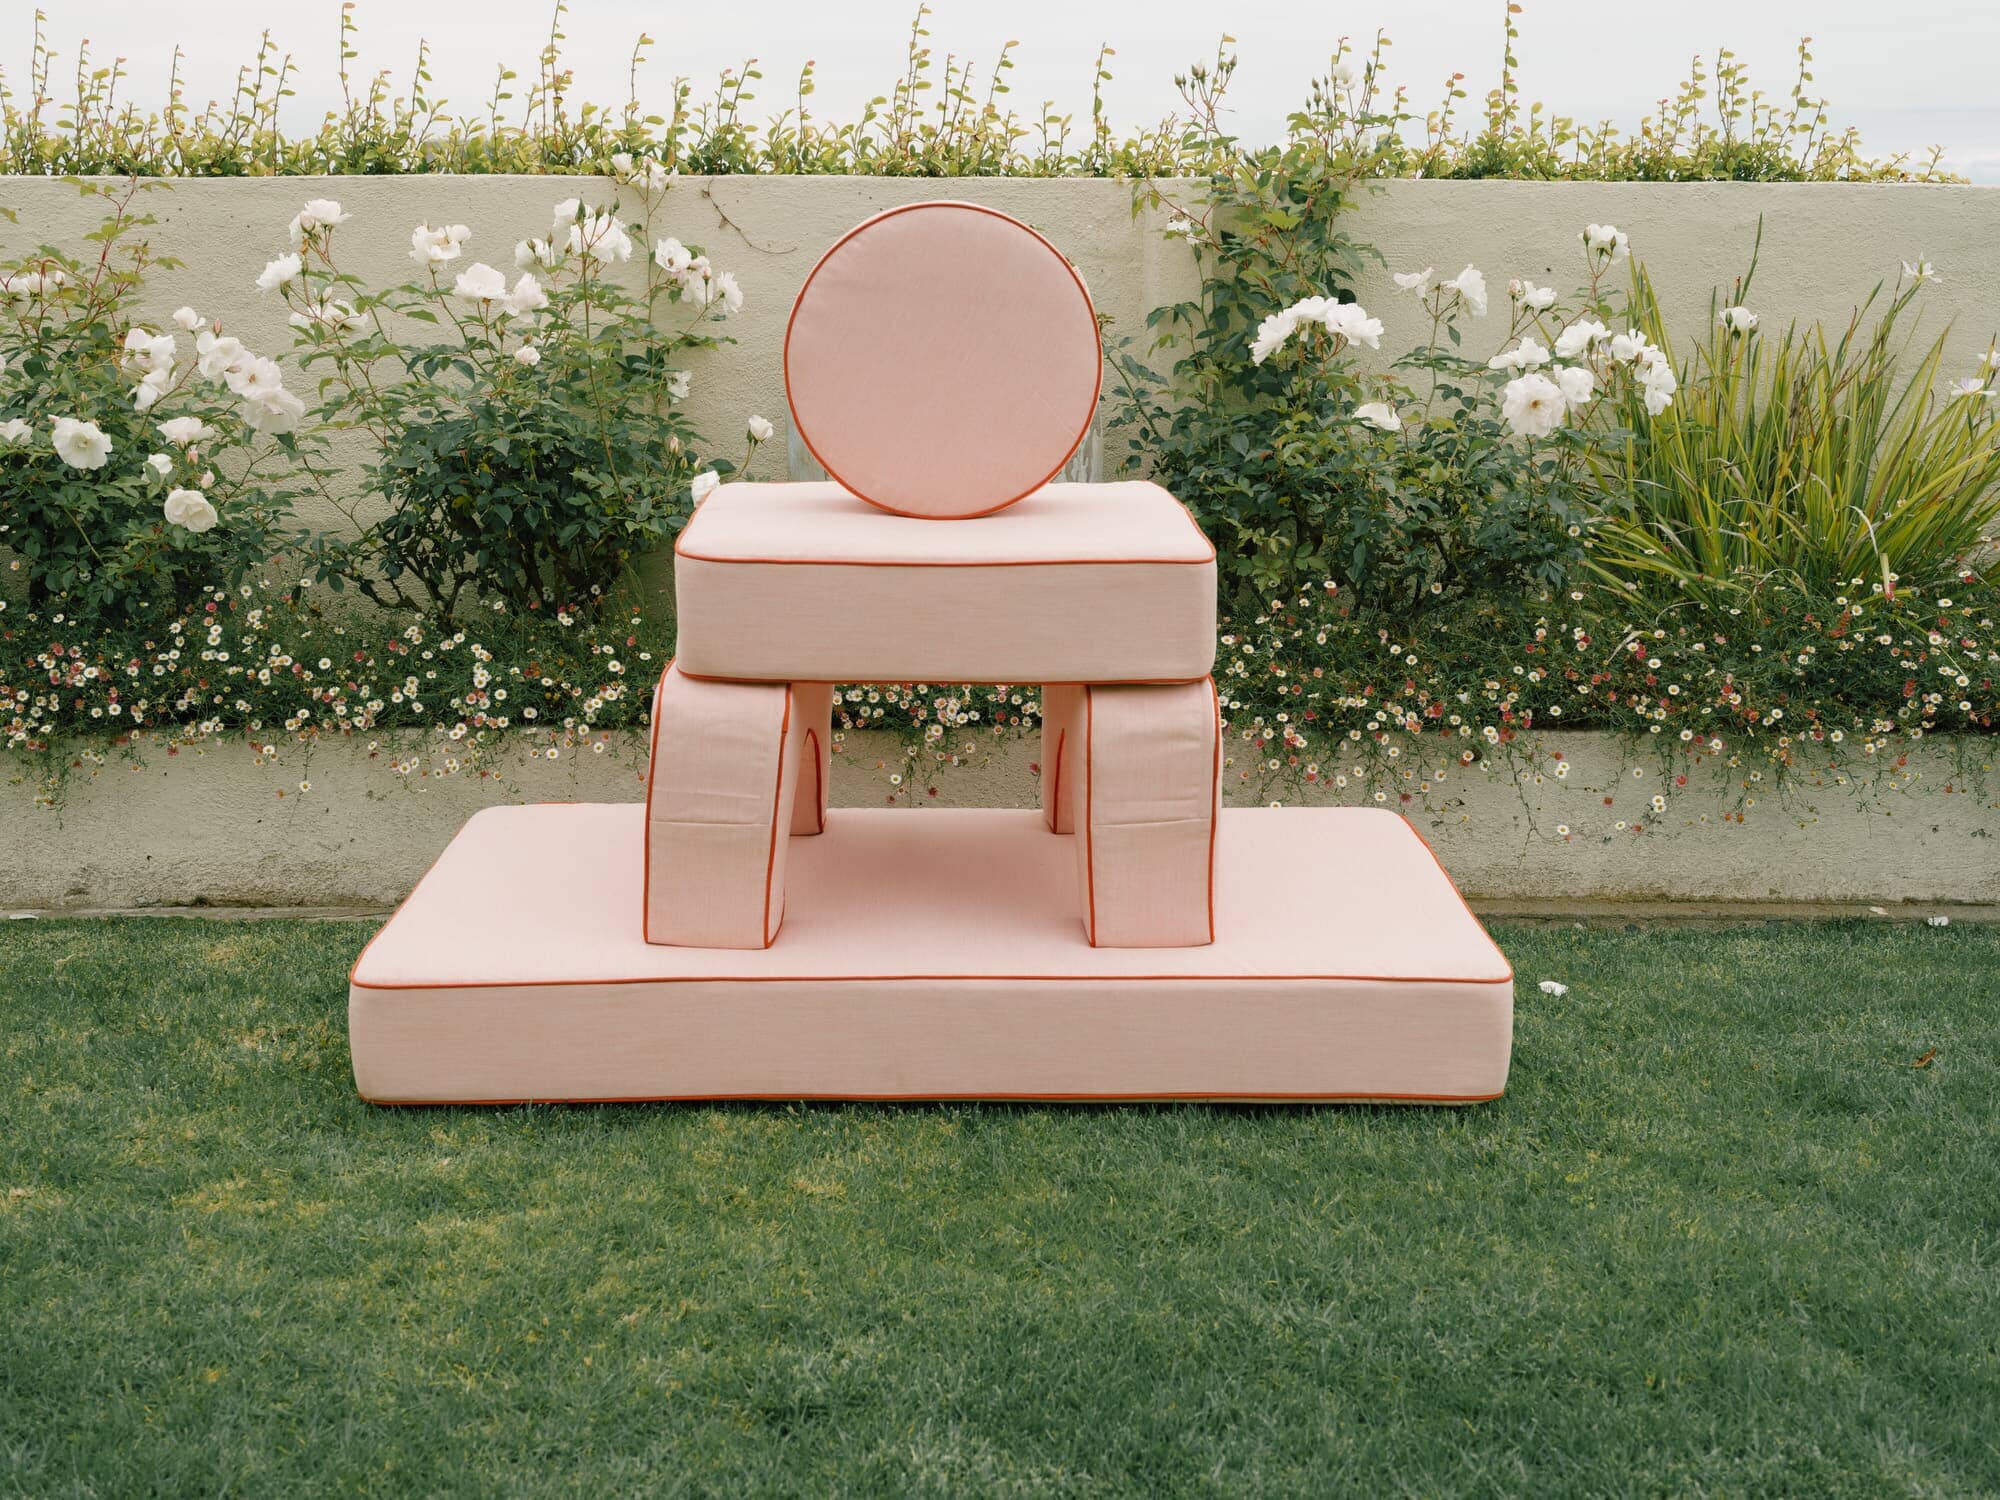 Riviera pink modular pillow stack in a garden setting